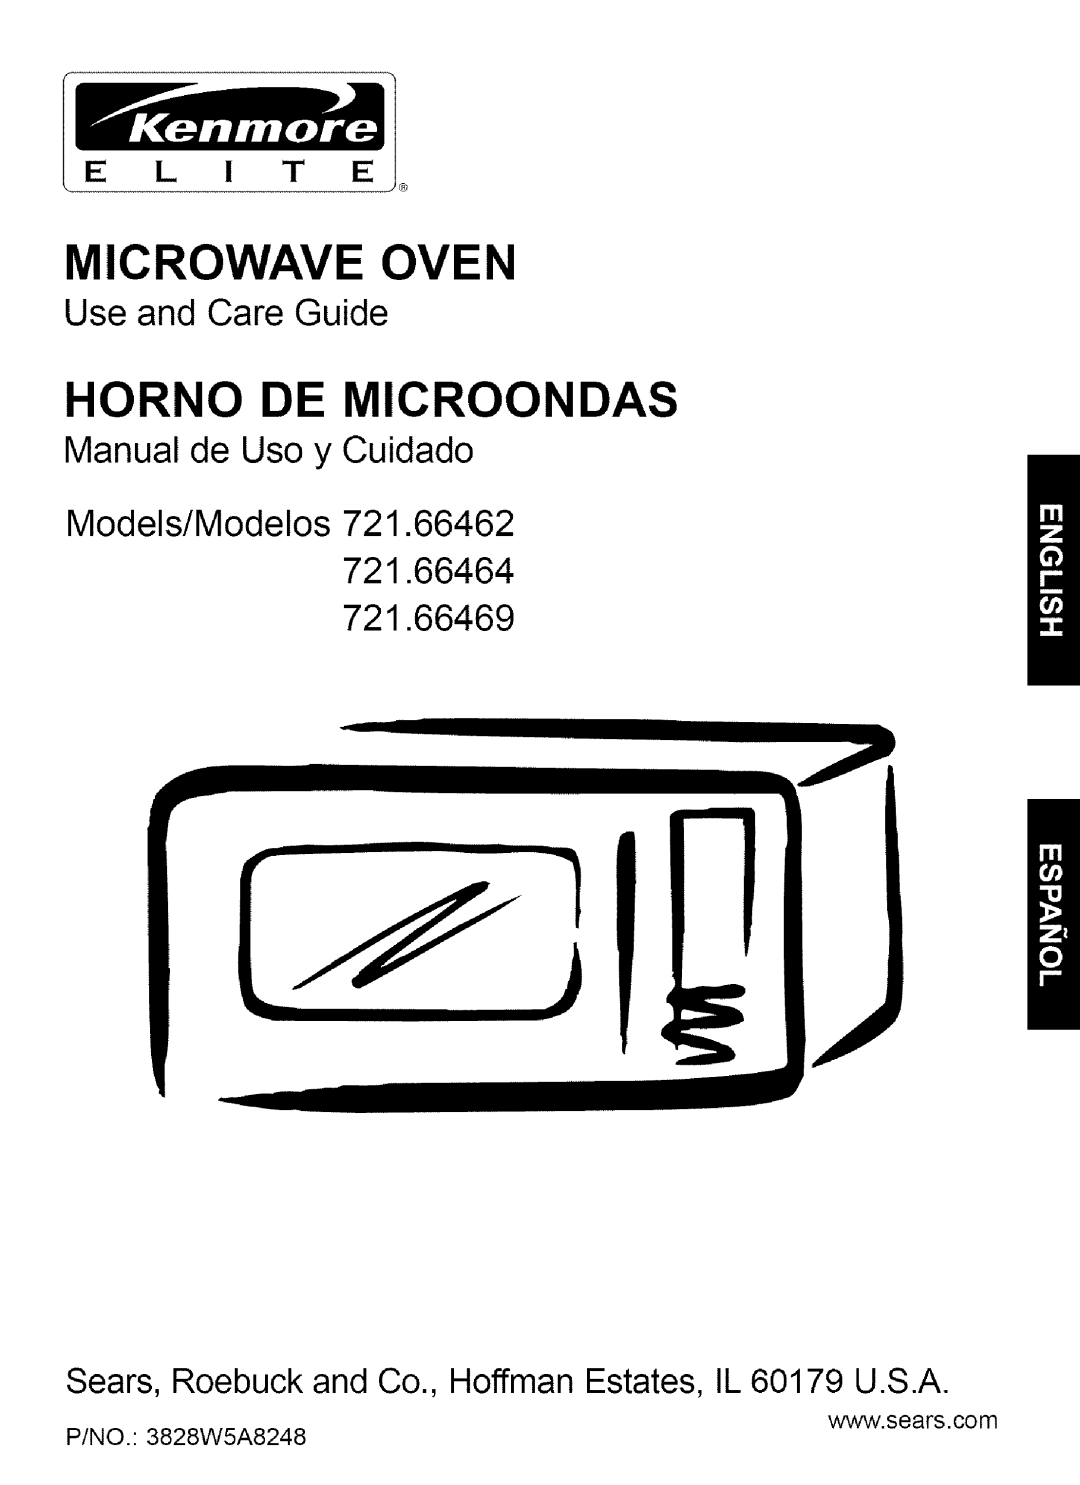 Kenmore 721.66462, 721.66464 manual E L I T E, P/NO. 3828W5A8248, Microwave Oven, Horno De Microondas, Use and Care Guide 